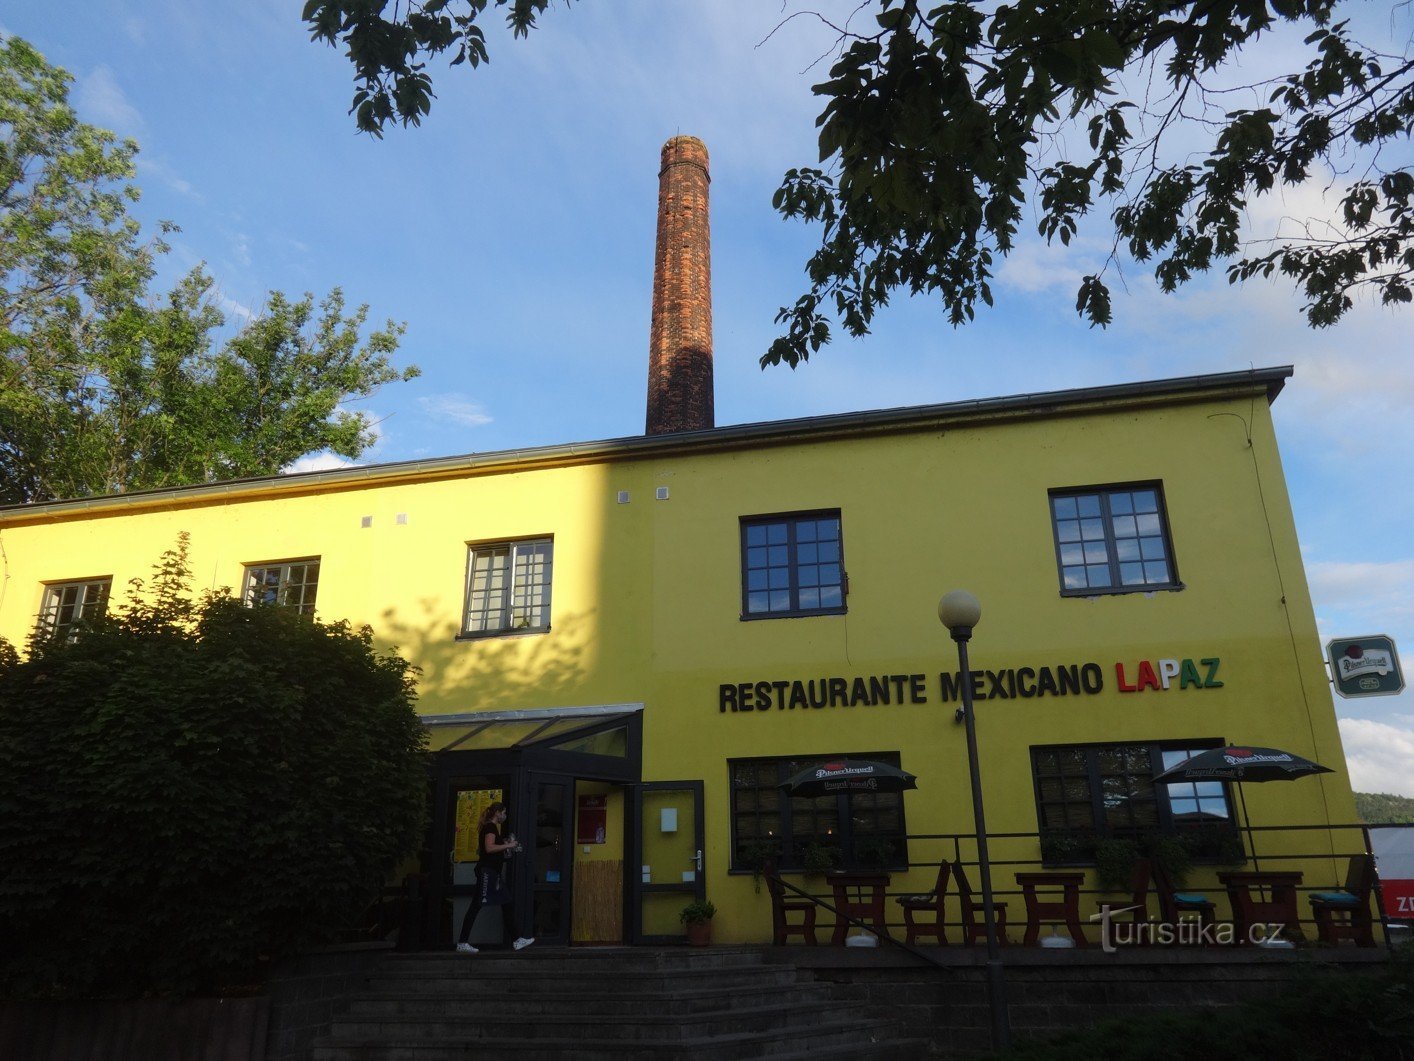 Mexican restaurant LaPaz in Beroun